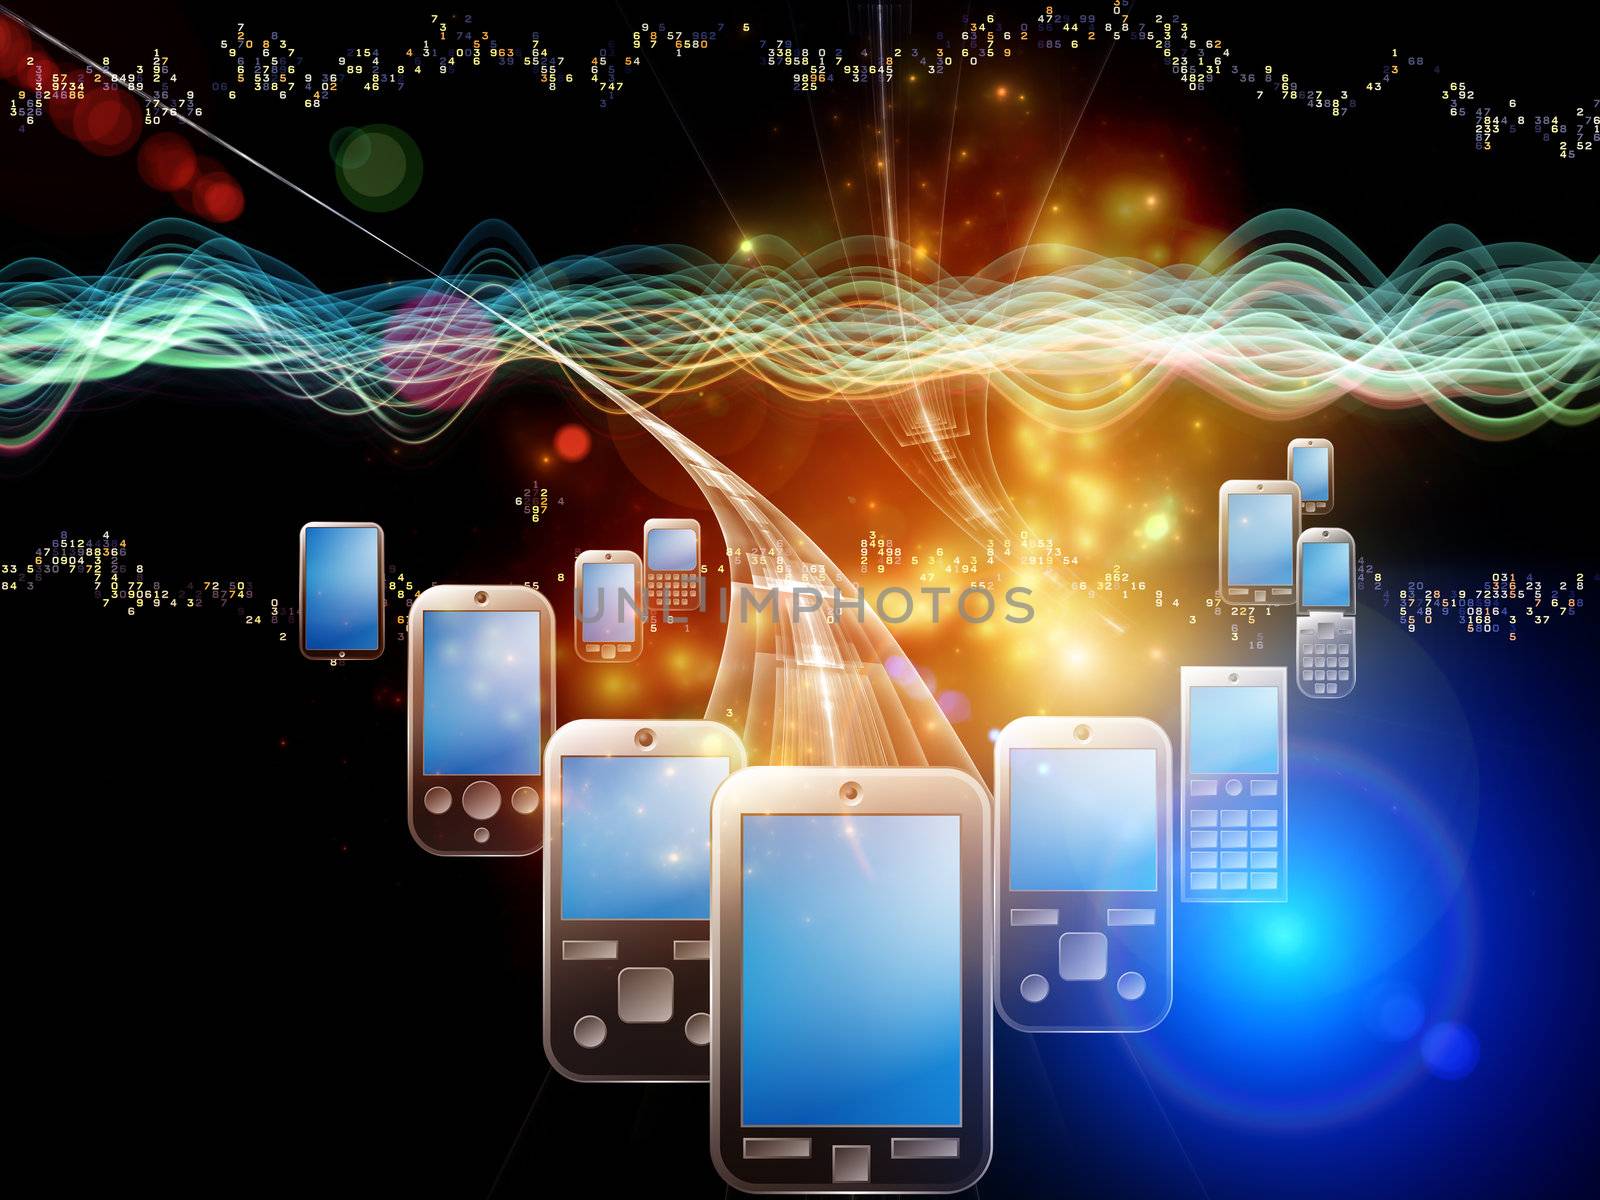 Digital Phone Technology by agsandrew